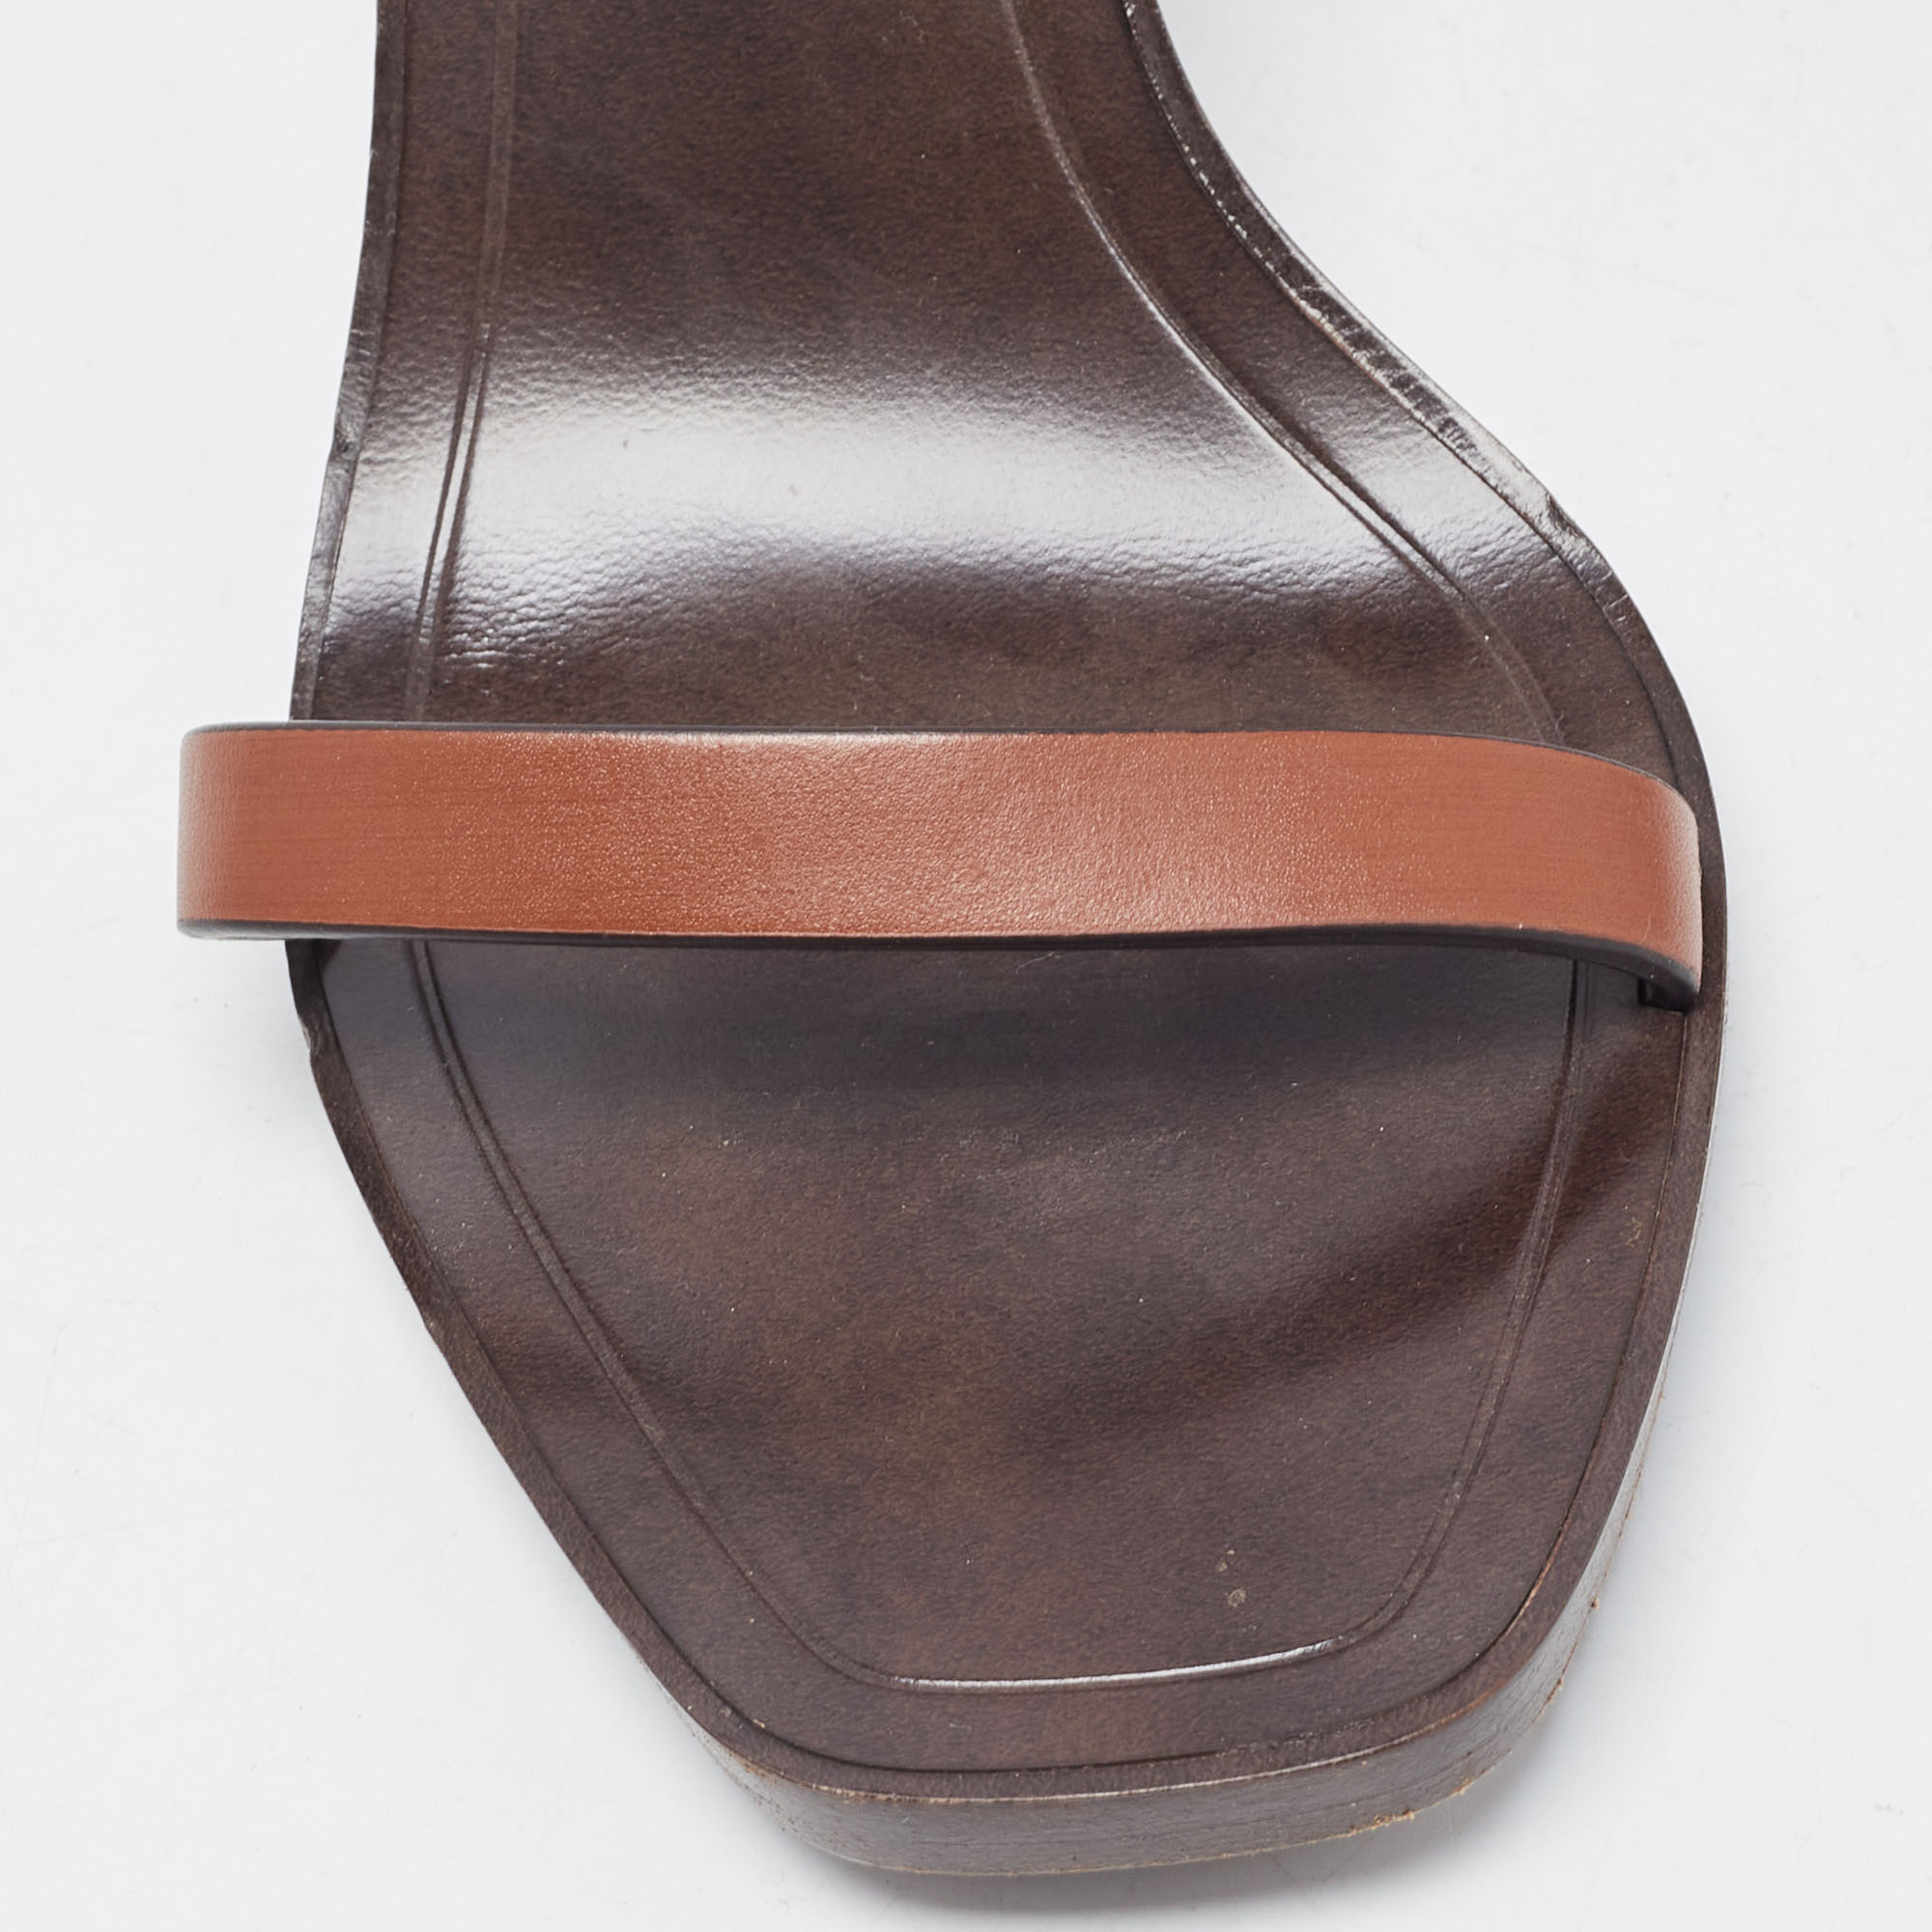 Saint Laurent Brown Leather Ankle Strap  Sandals Size 38.5